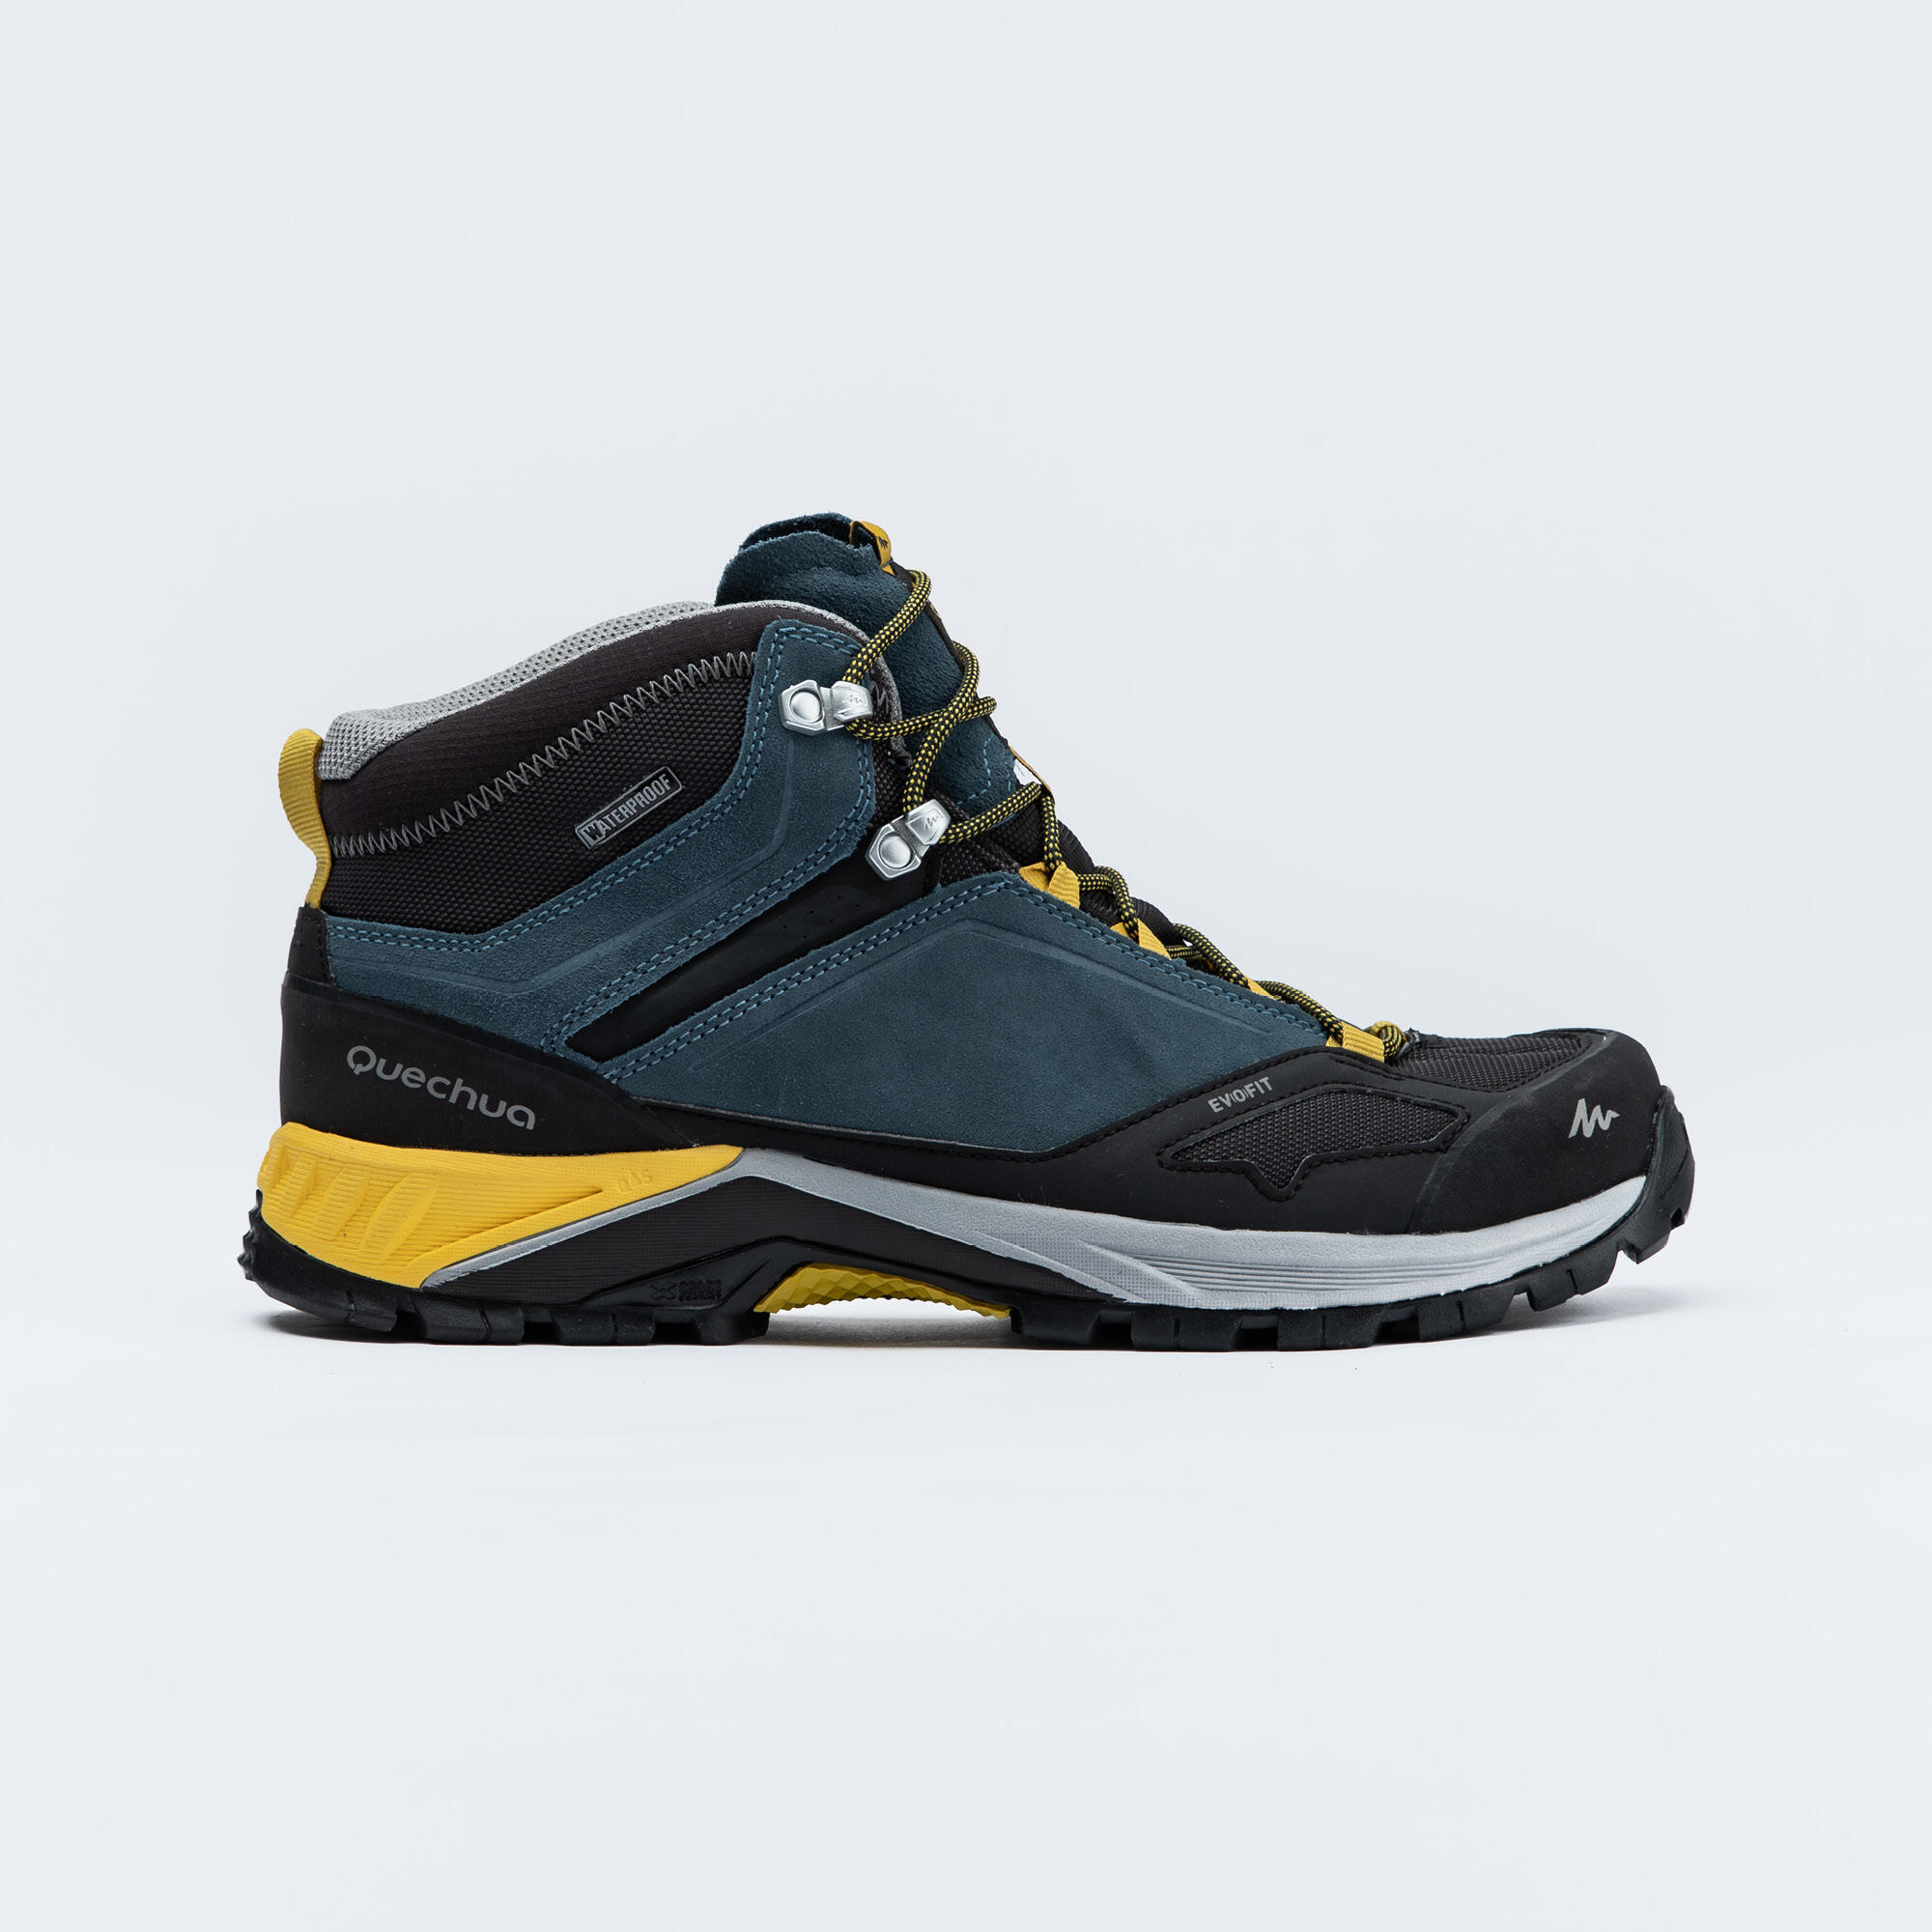 Men's waterproof mountain walking shoes - MH500 Mid - Blue/Yellow 2/4